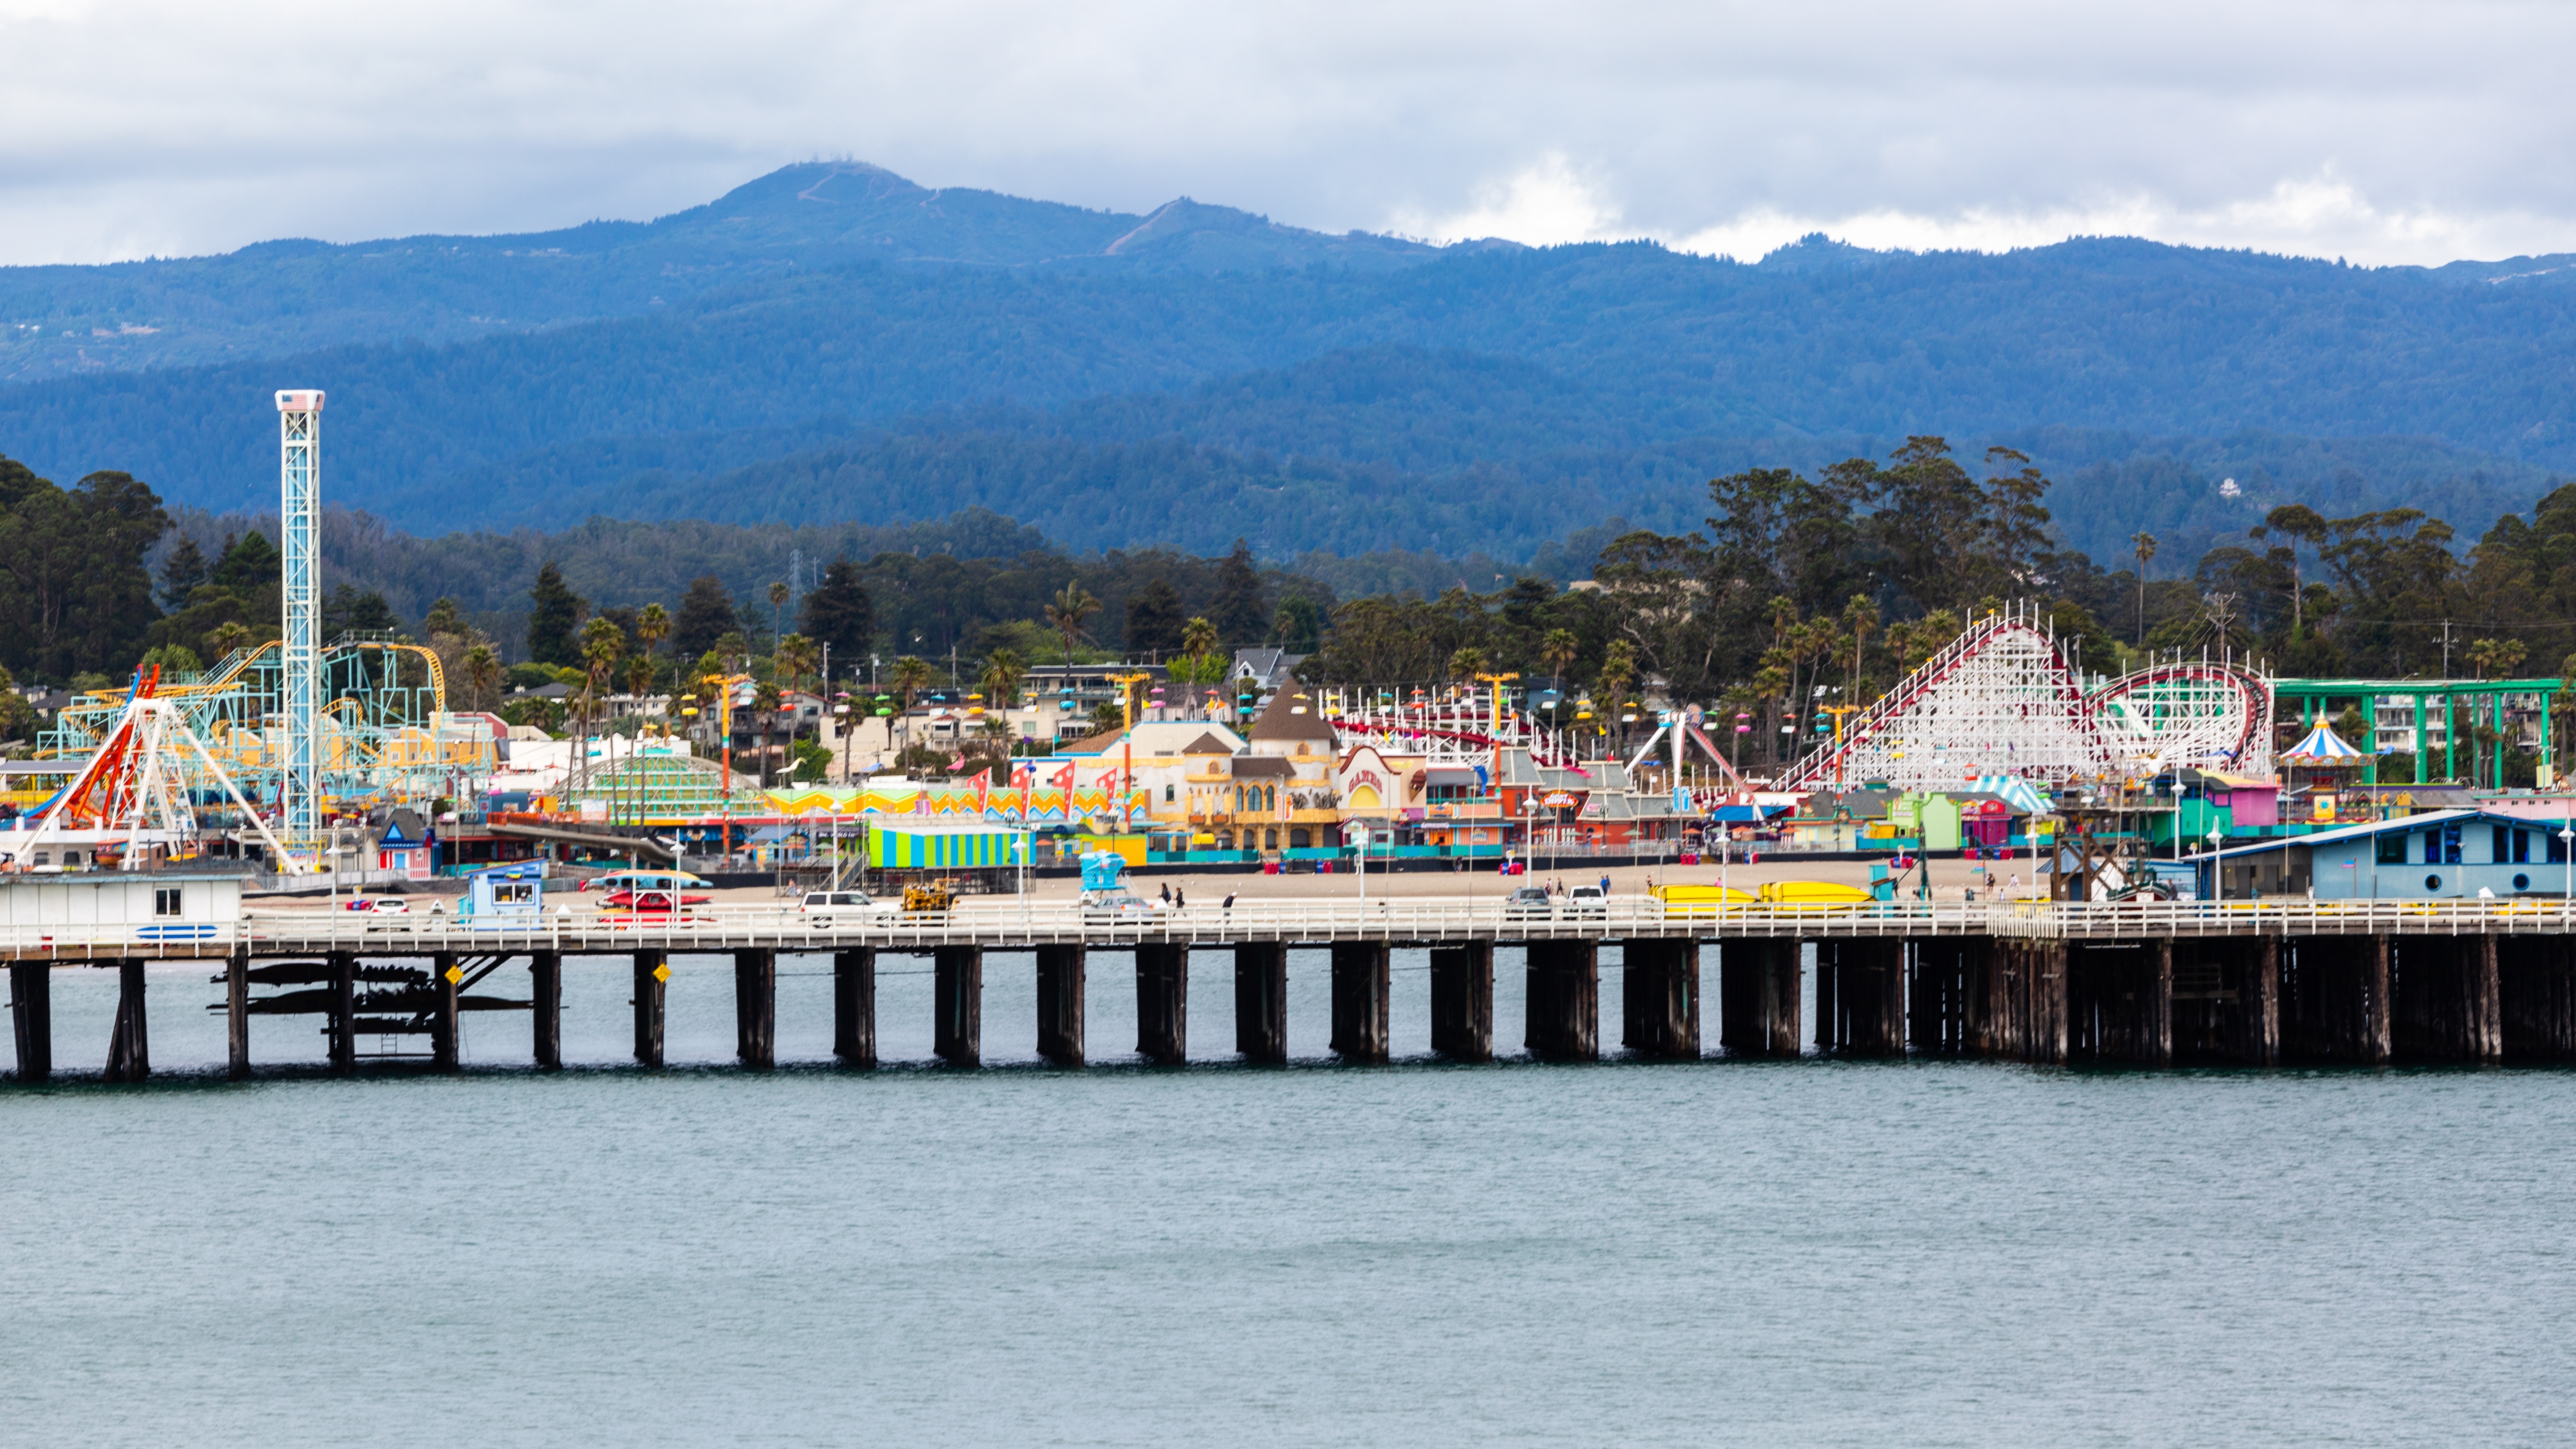 Santa Cruz Beach Boardwalk Amusement Park, Santa Cruz, United States